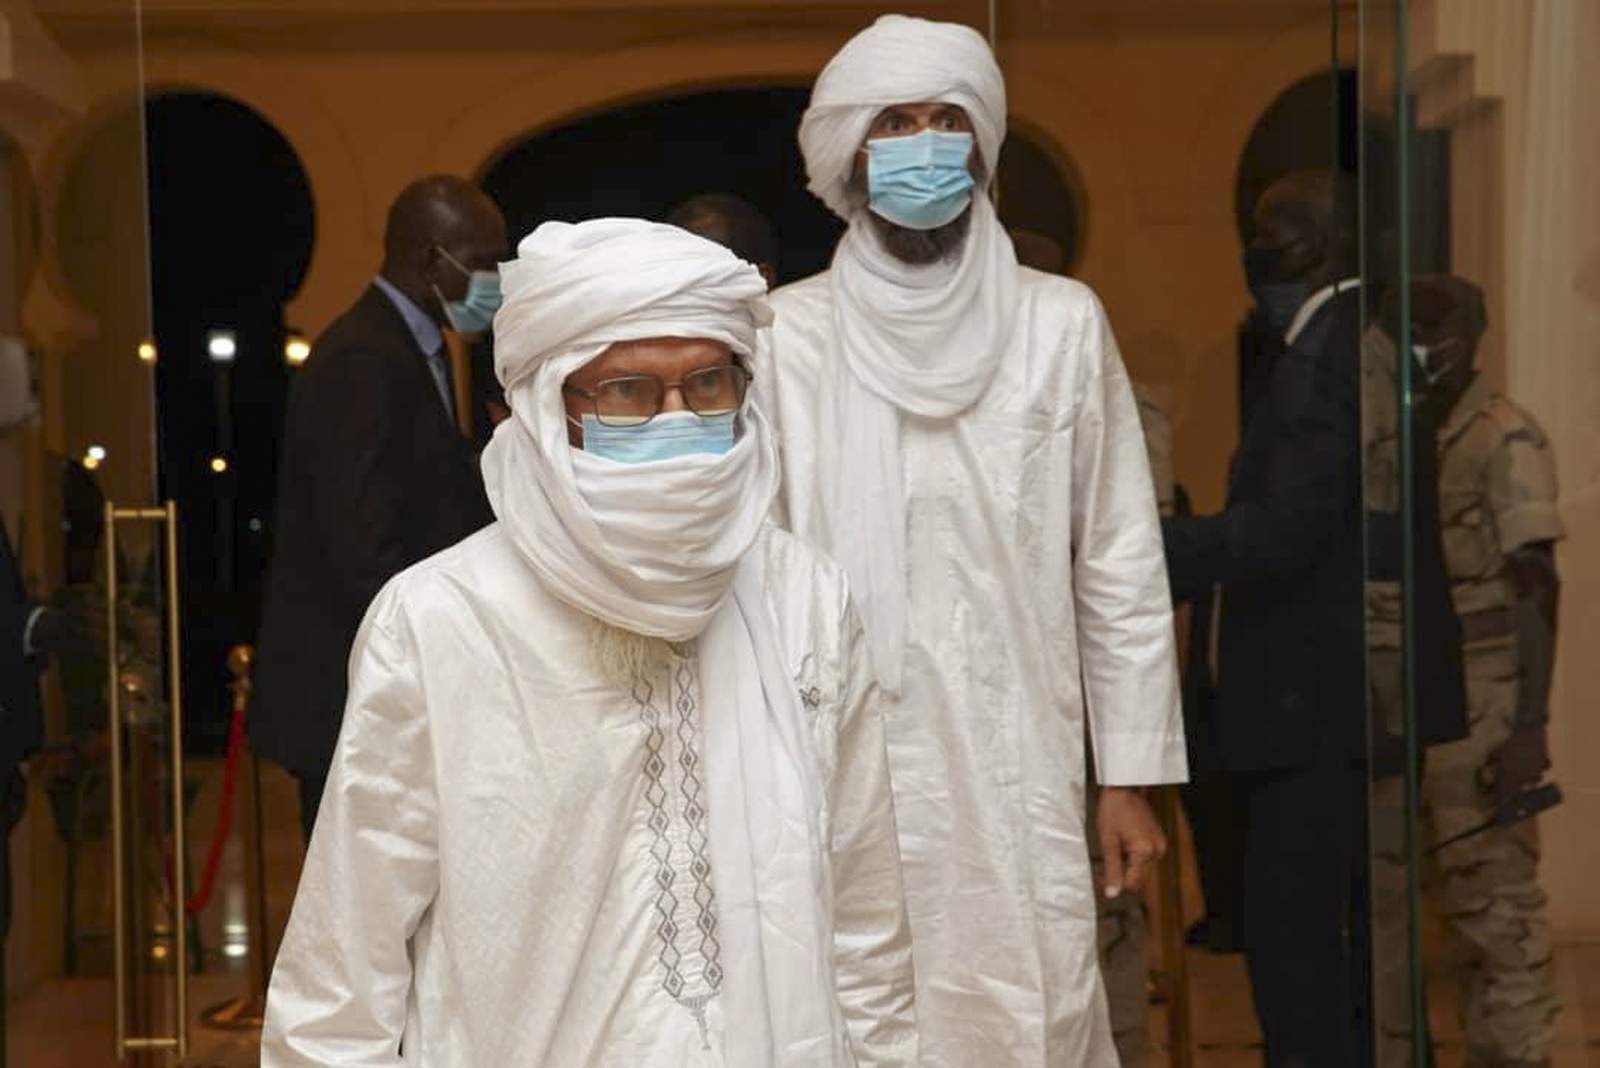 Mali: 3 European hostages, 1 Malian politician freed